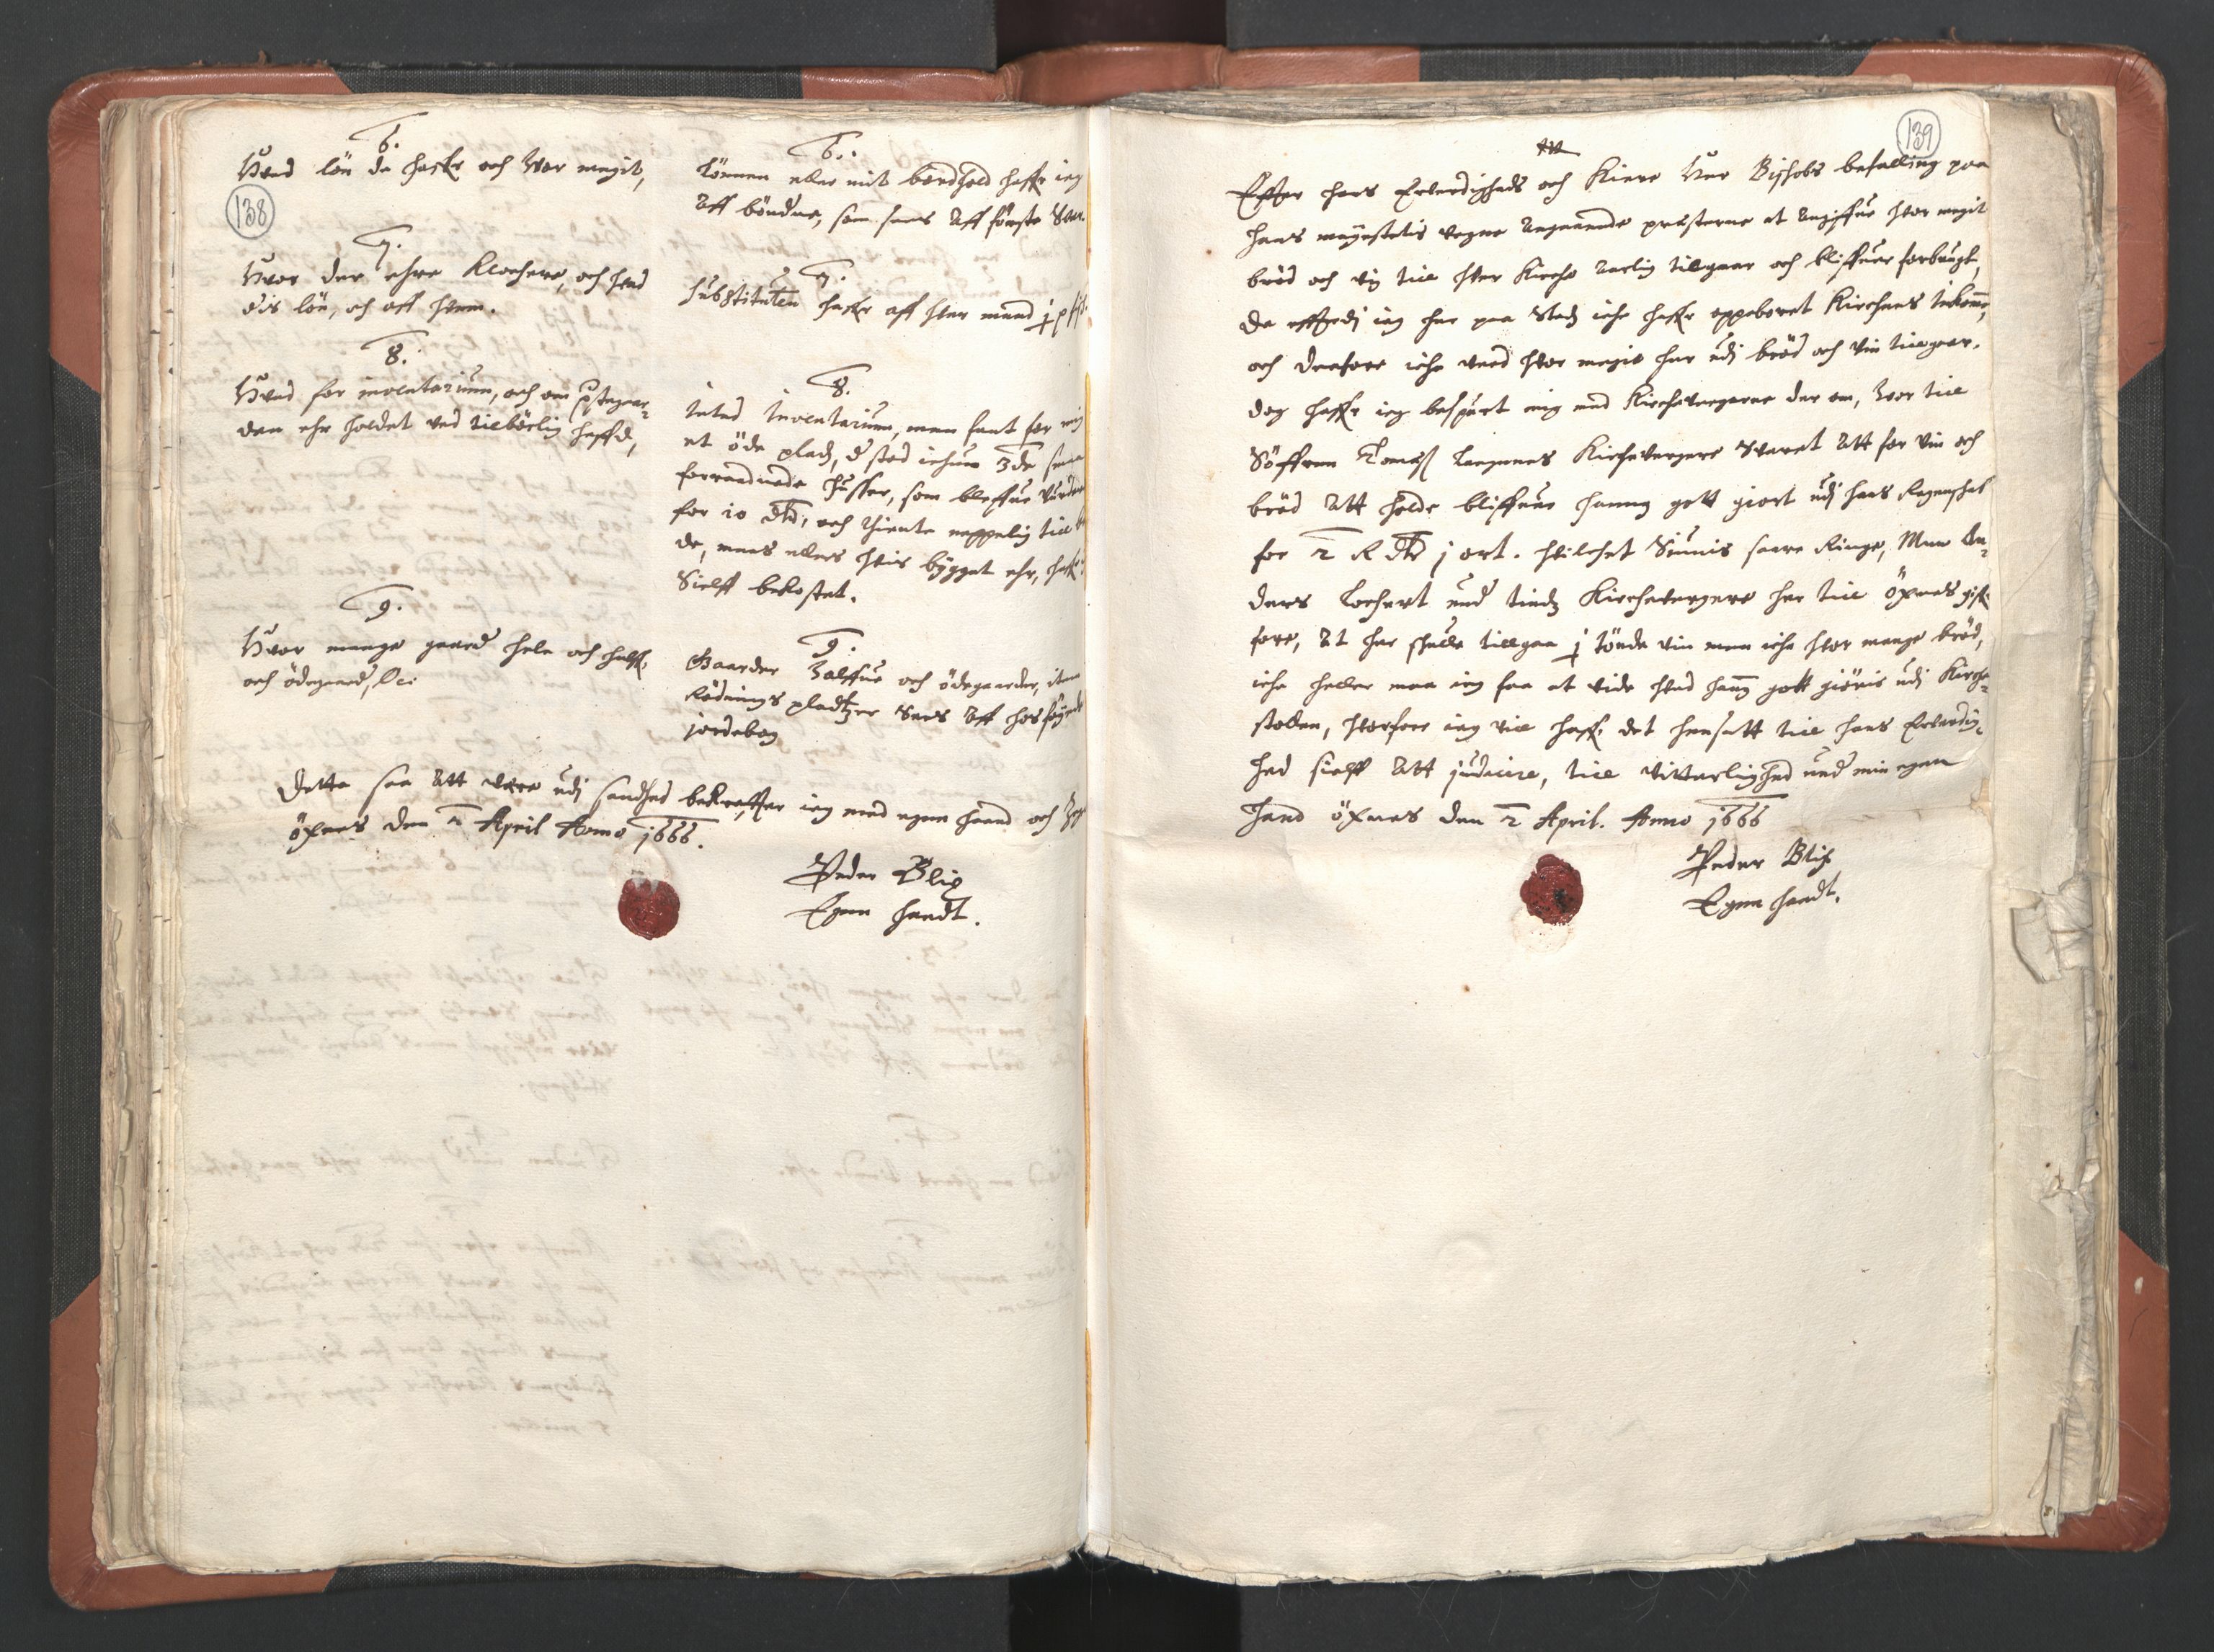 RA, Vicar's Census 1664-1666, no. 36: Lofoten and Vesterålen deanery, Senja deanery and Troms deanery, 1664-1666, p. 138-139